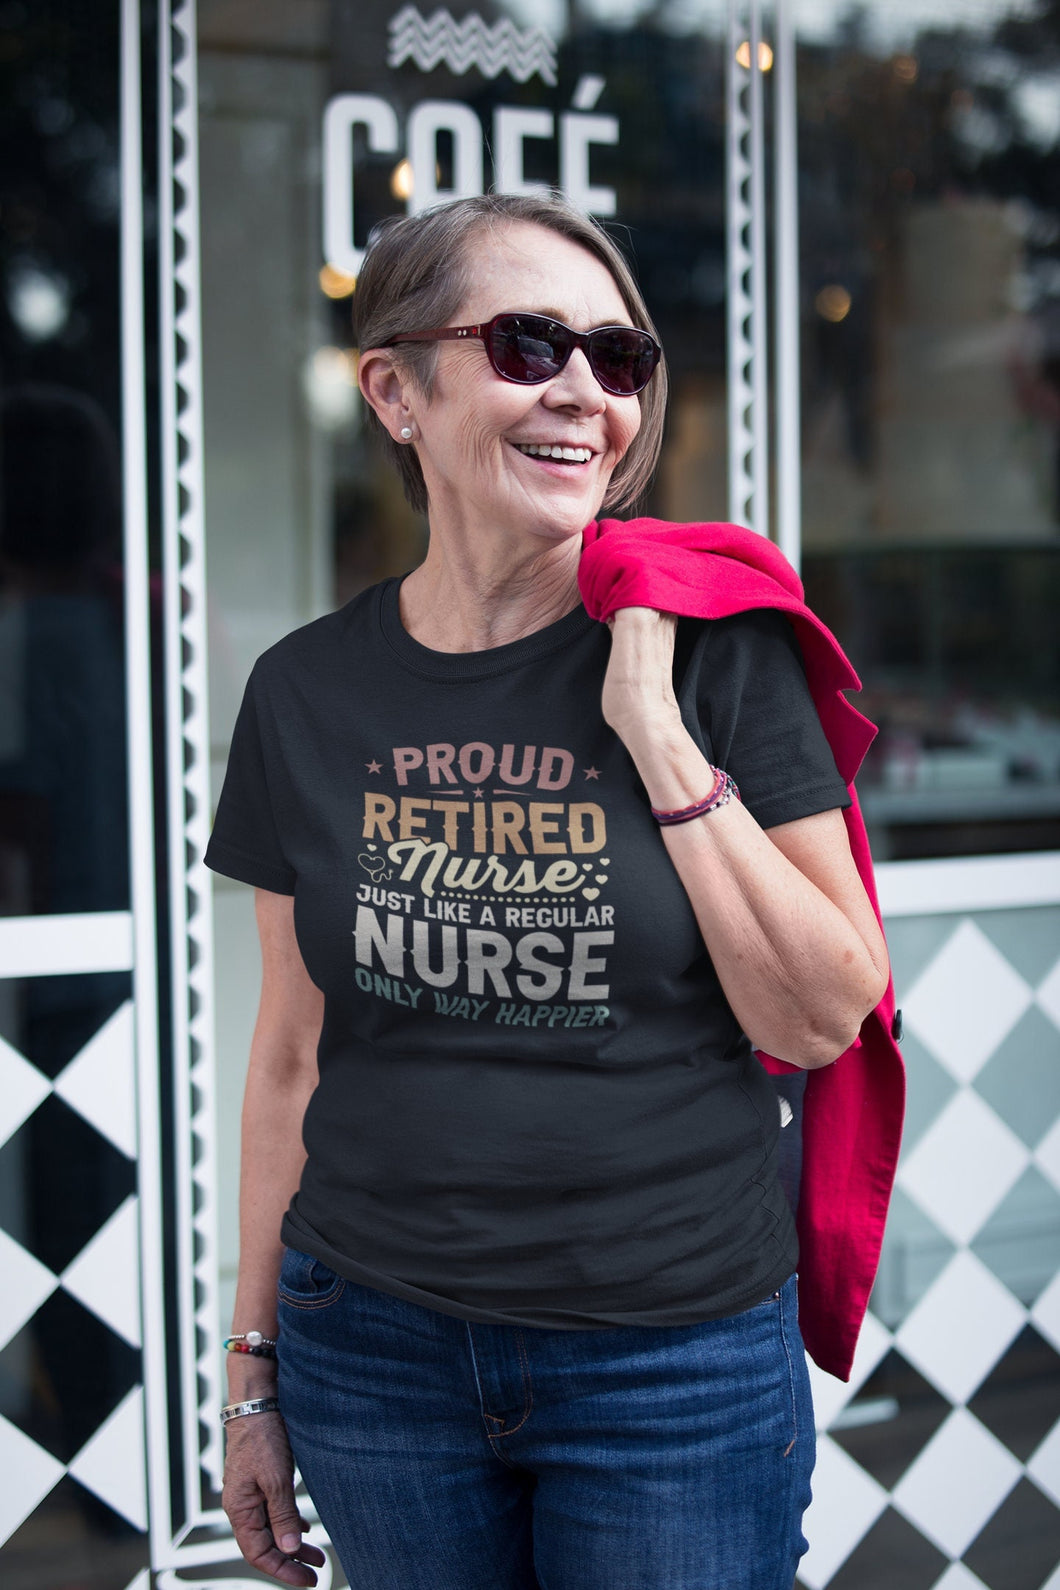 Proud Retired Nurse Just Like a Regular Nurse Only way Happier Shirt, Nurse Life Shirt